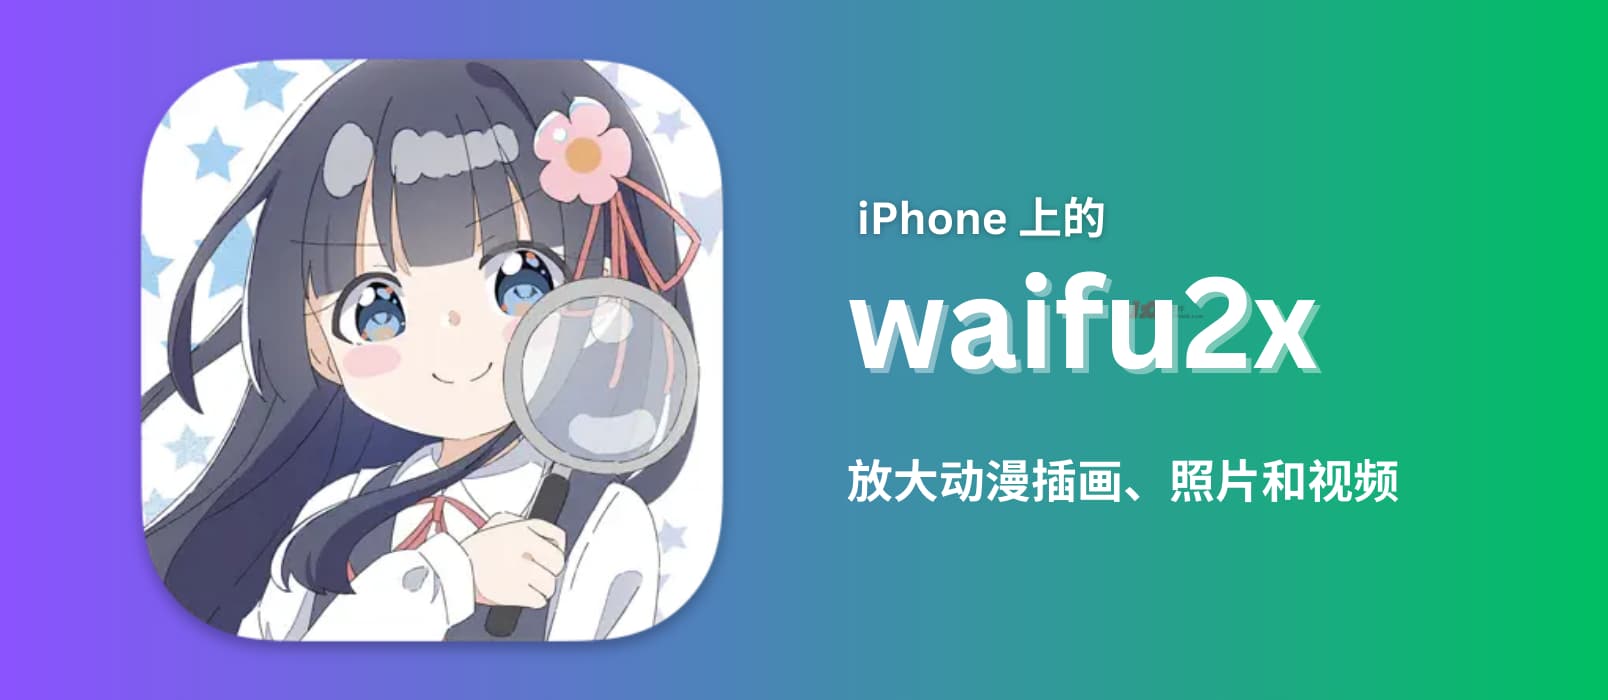 waifu2x - 改善图片和视频画质：iPhone、iPad、Mac 版本